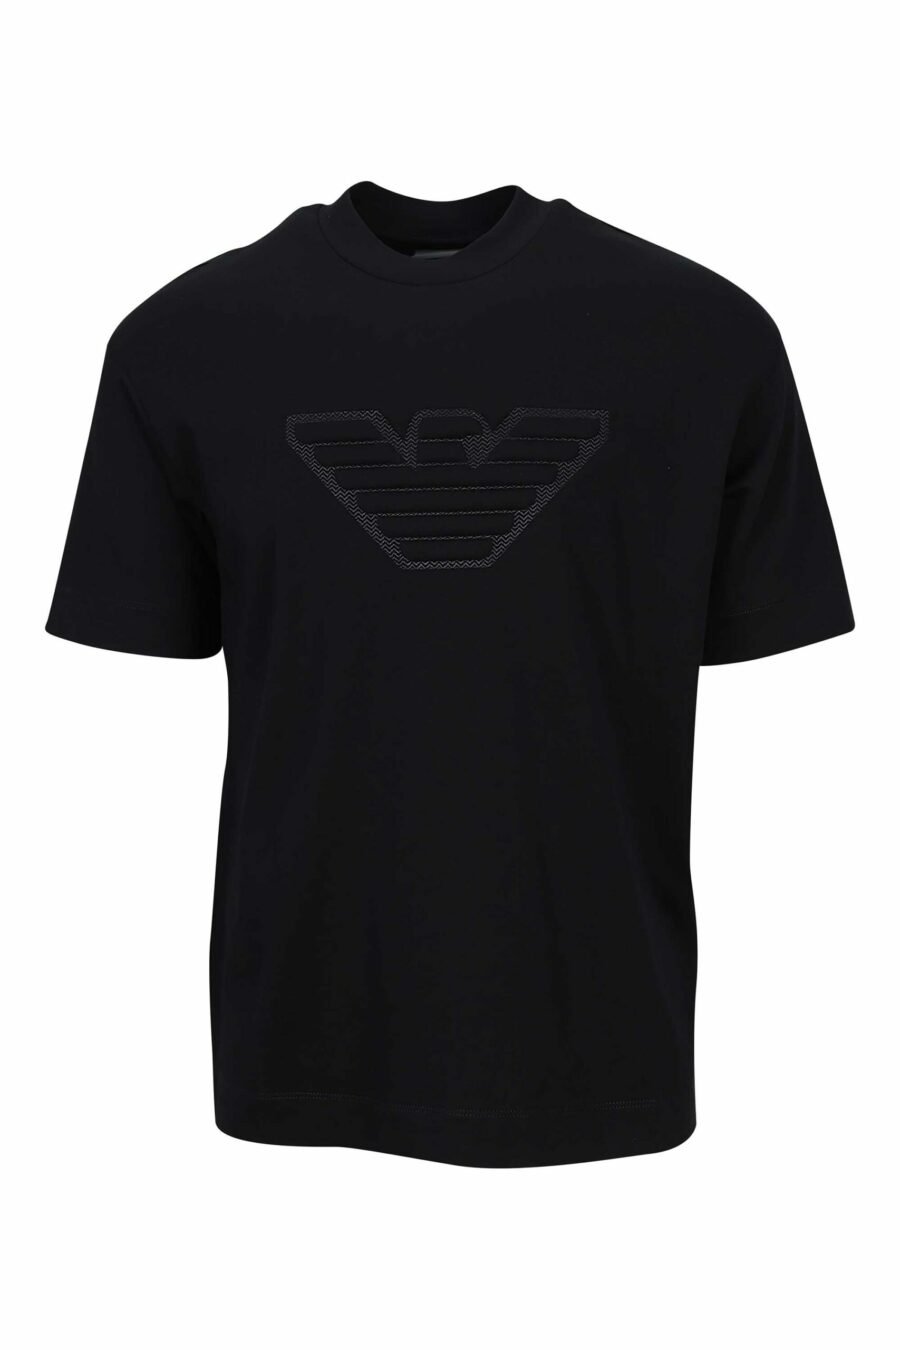 T-shirt noir avec maxilogo aigle monochrome - 8057970432920 scaled